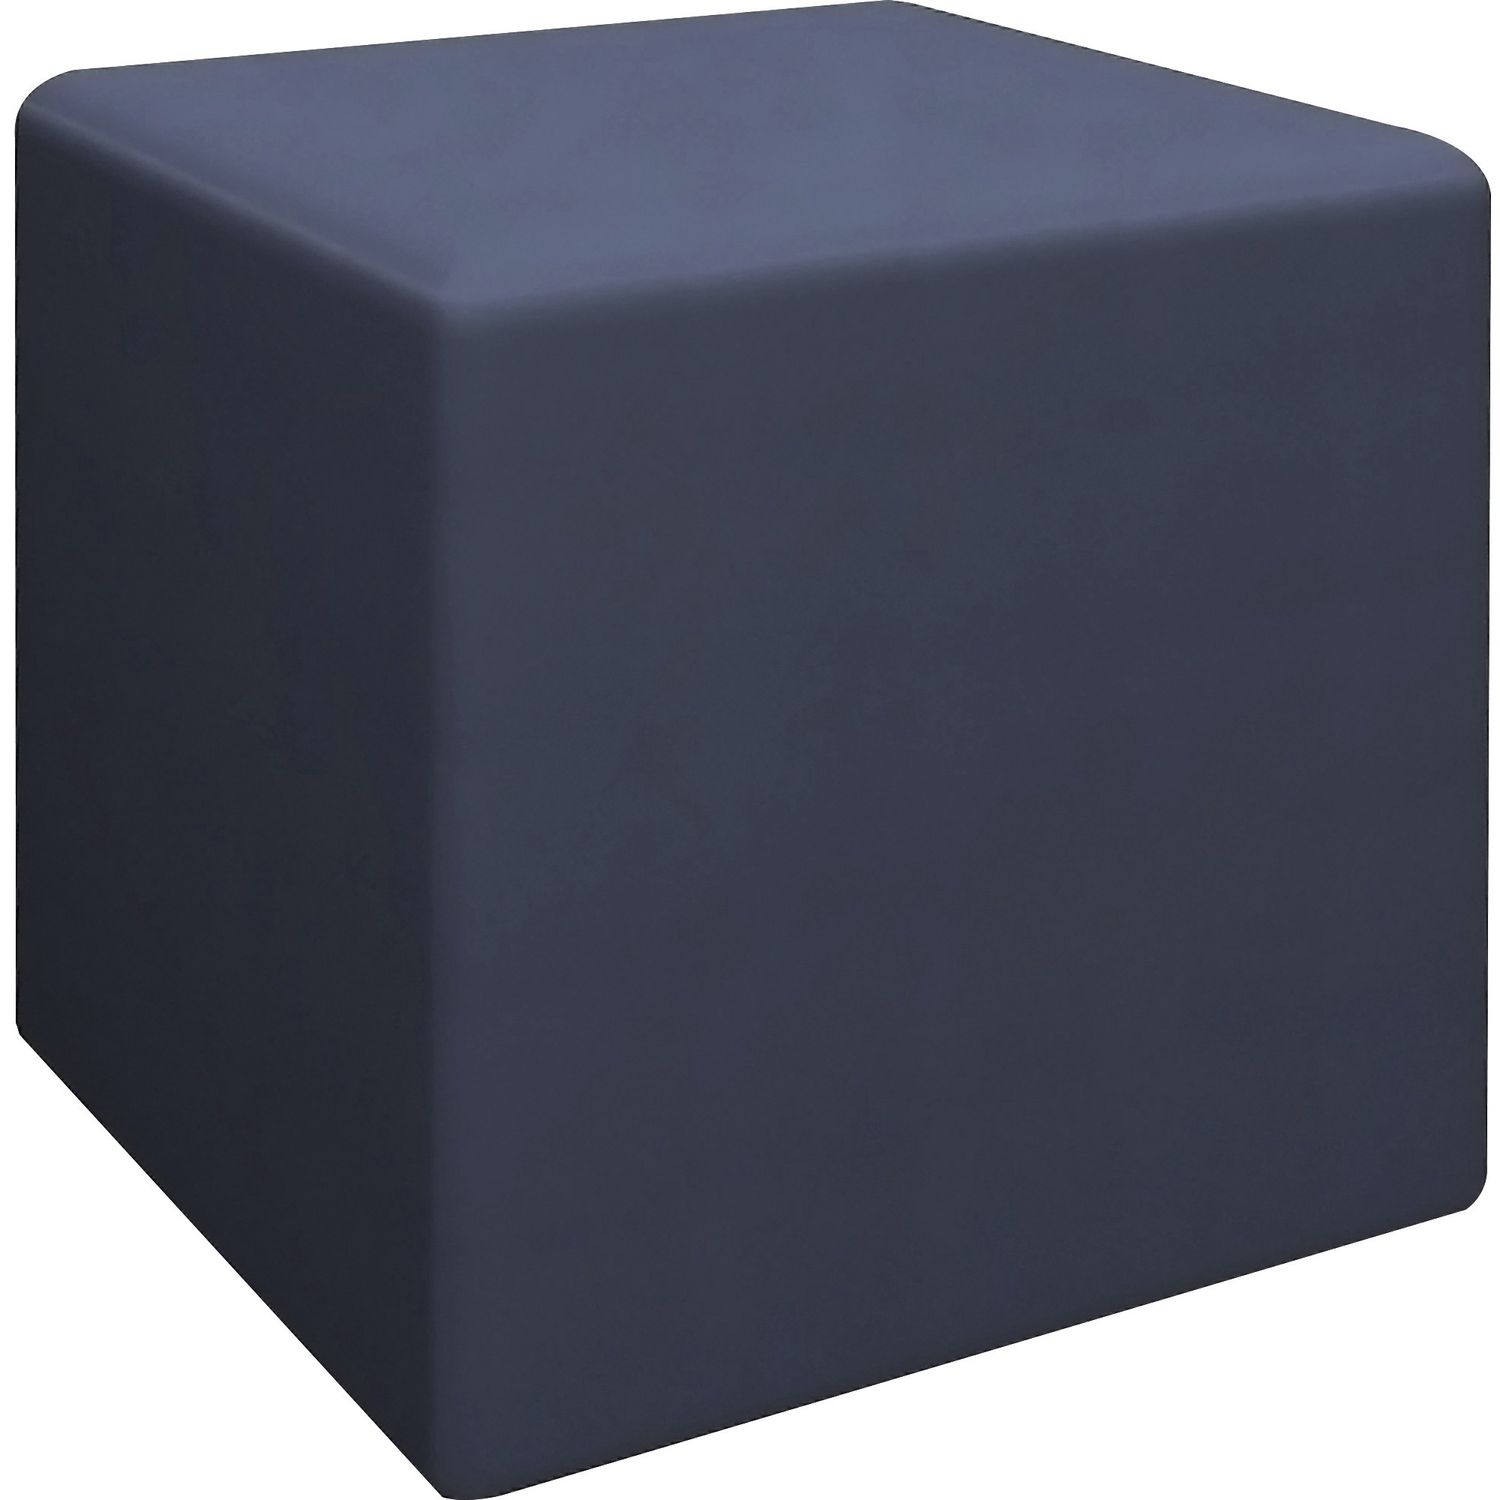 1517 Youth-Size Cube 15" x 15" x 15", Material: Polyurethane Upholstery, Hardwood Base, Foam, Polycarbonate Upholstery, Polyester Resin Upholstery, Polyester Upholstery, Cotton Back